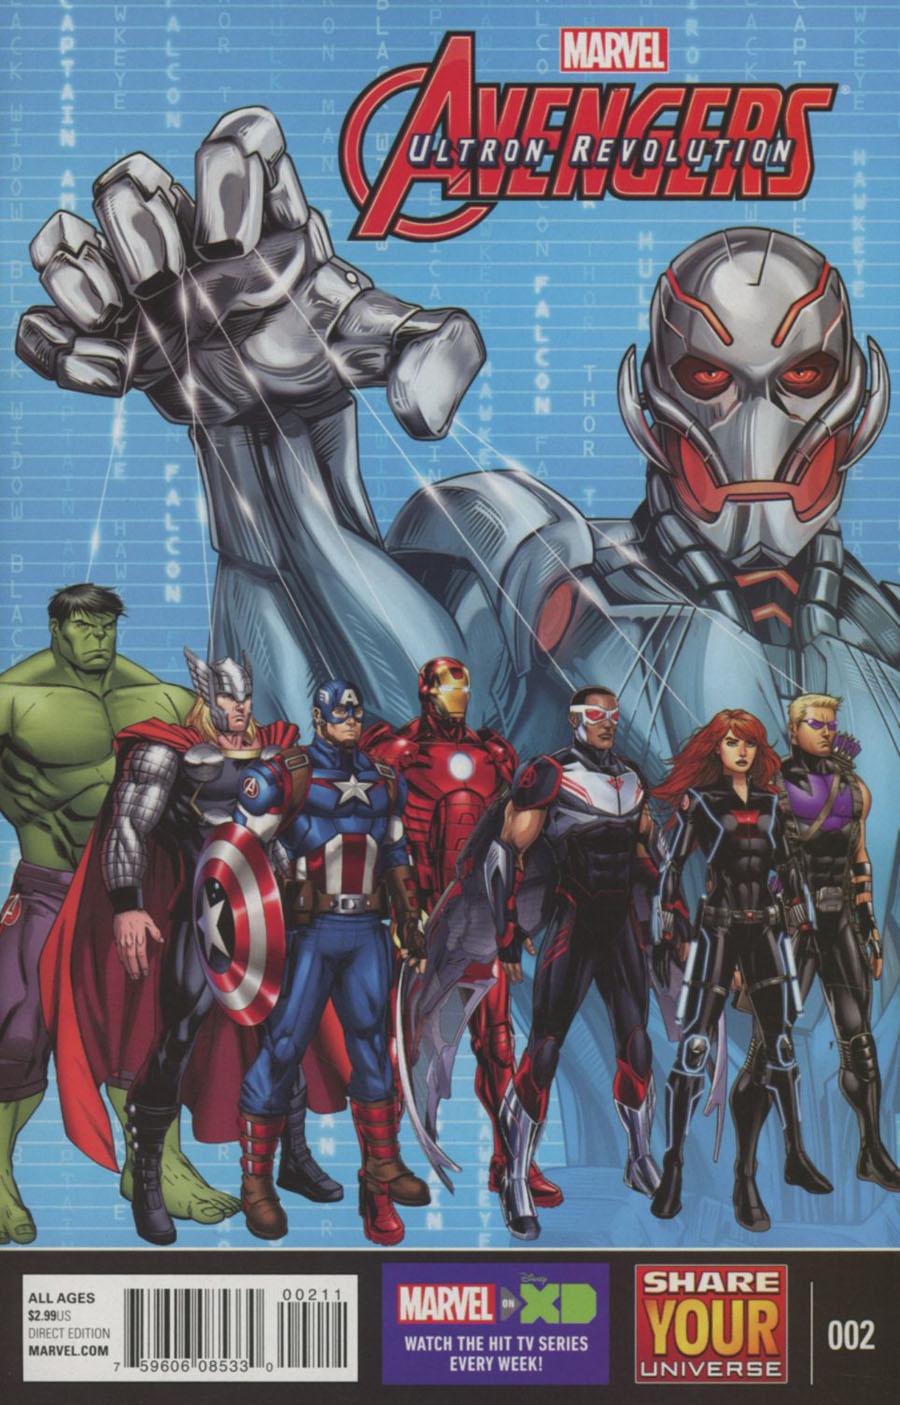 Marvel Universe Avengers Ultron Revolution Vol. 1 #2